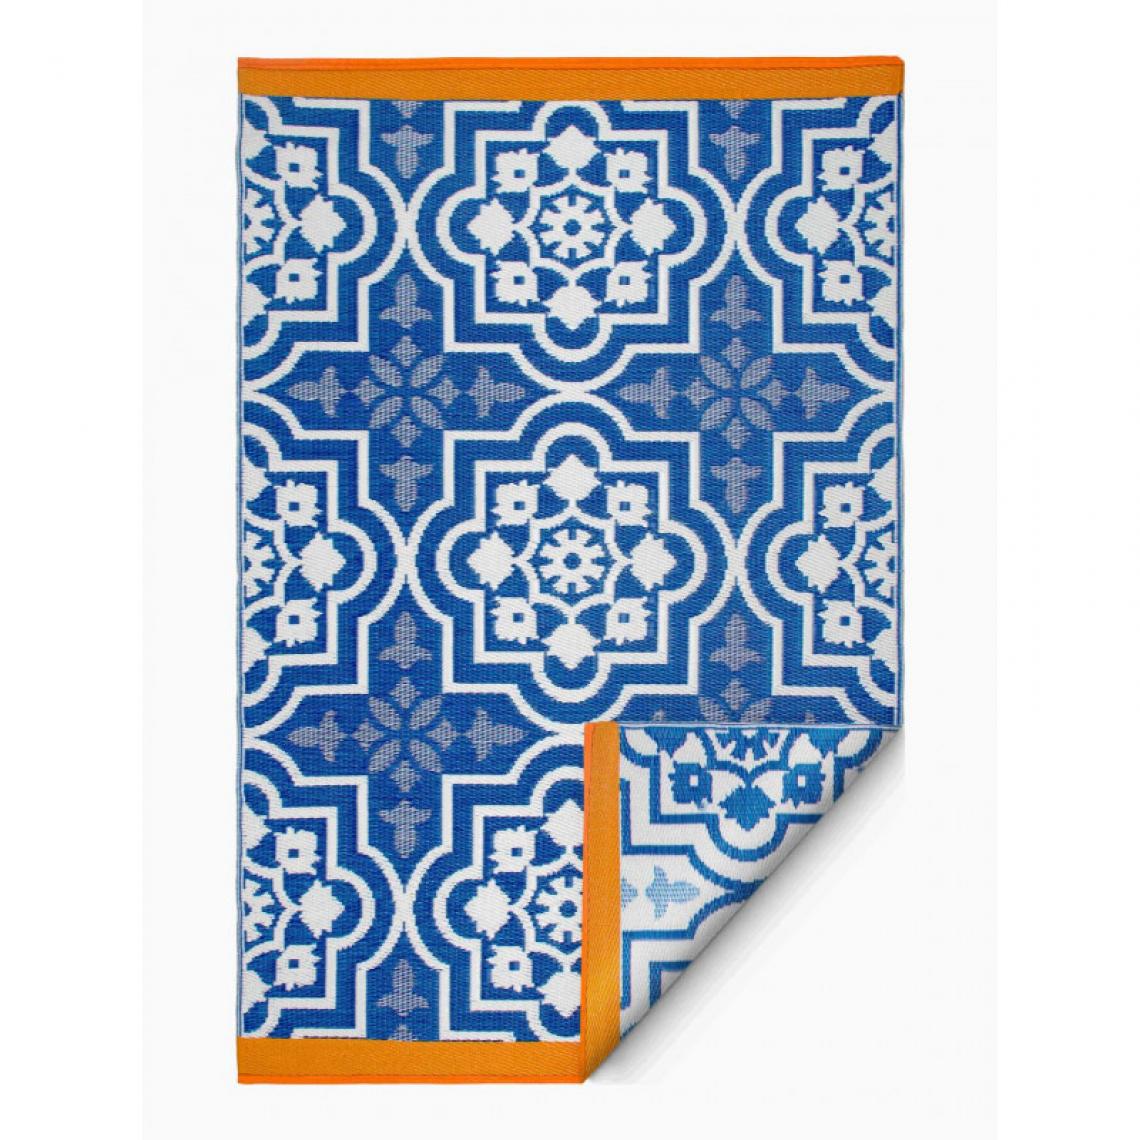 Ac-Deco - Tapis Puebla - L 90 x l 150 cm - Bleu et orange - Tapis